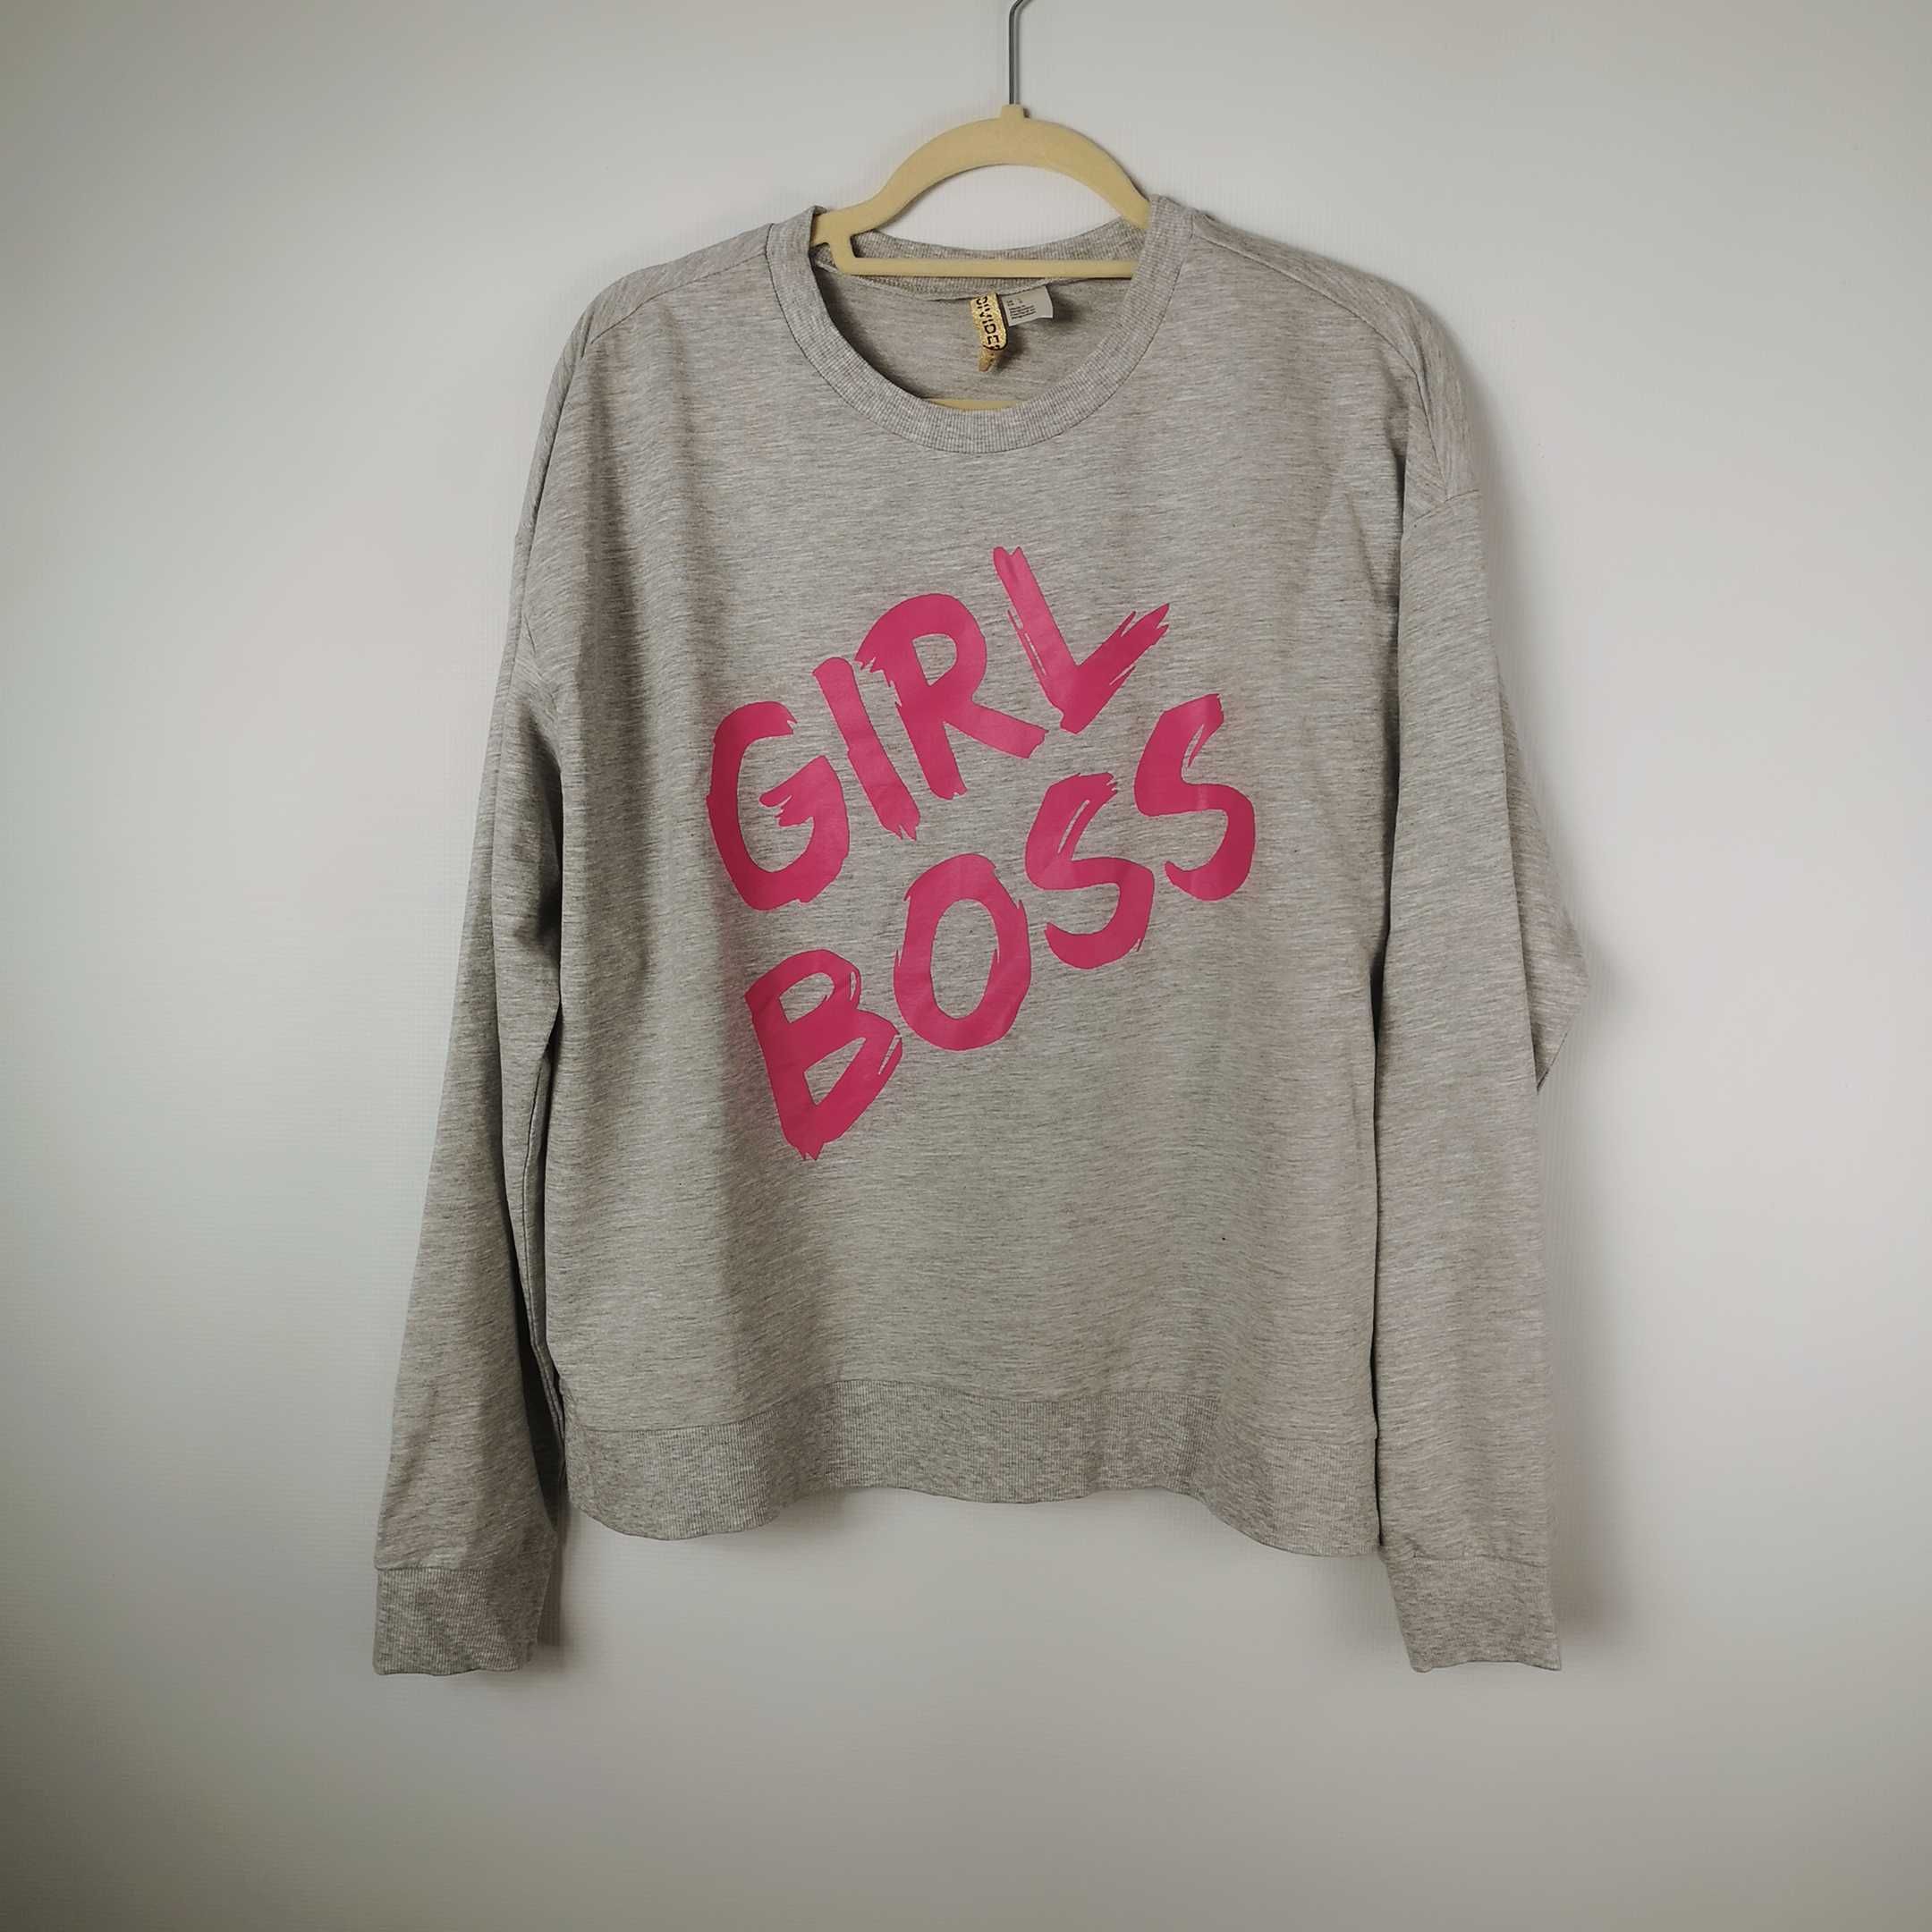 Bluza szara H&M Girl Boss S M L